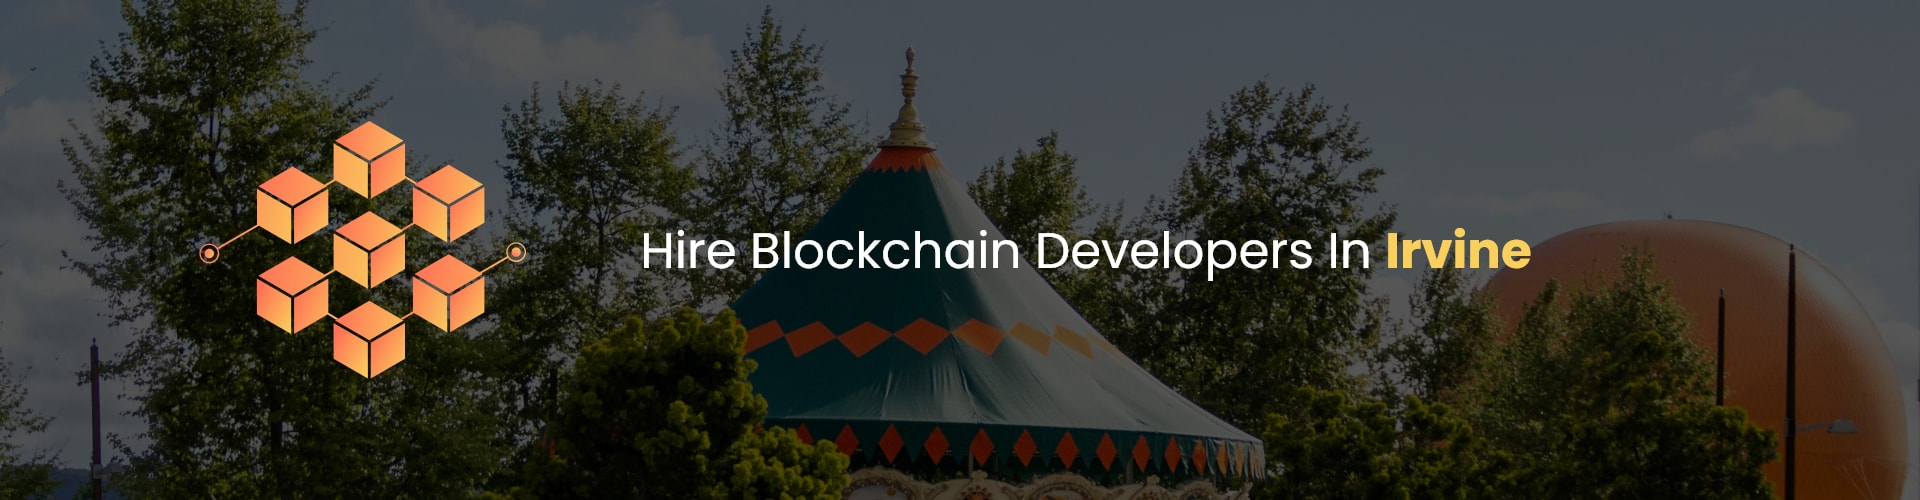 hire blockchain developers in irvine